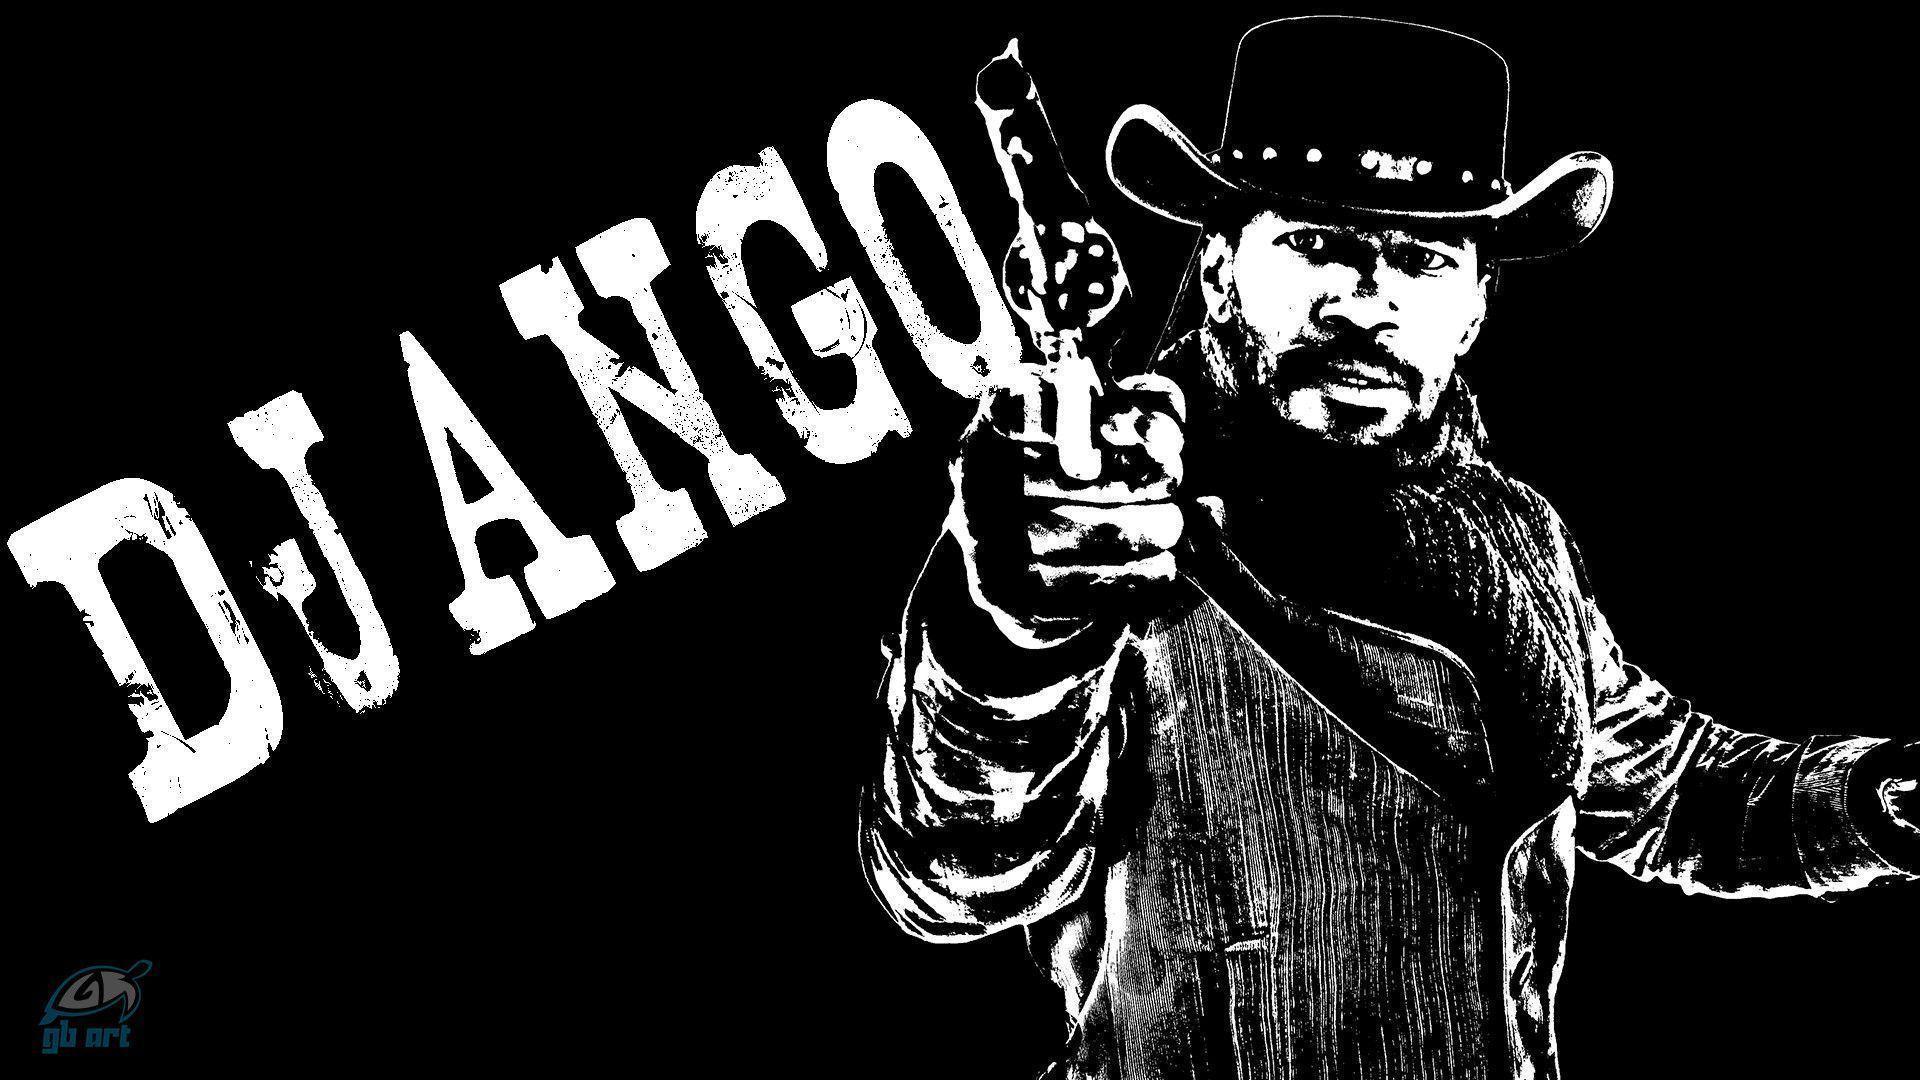 98+] Django Unchained Wallpapers - WallpaperSafari